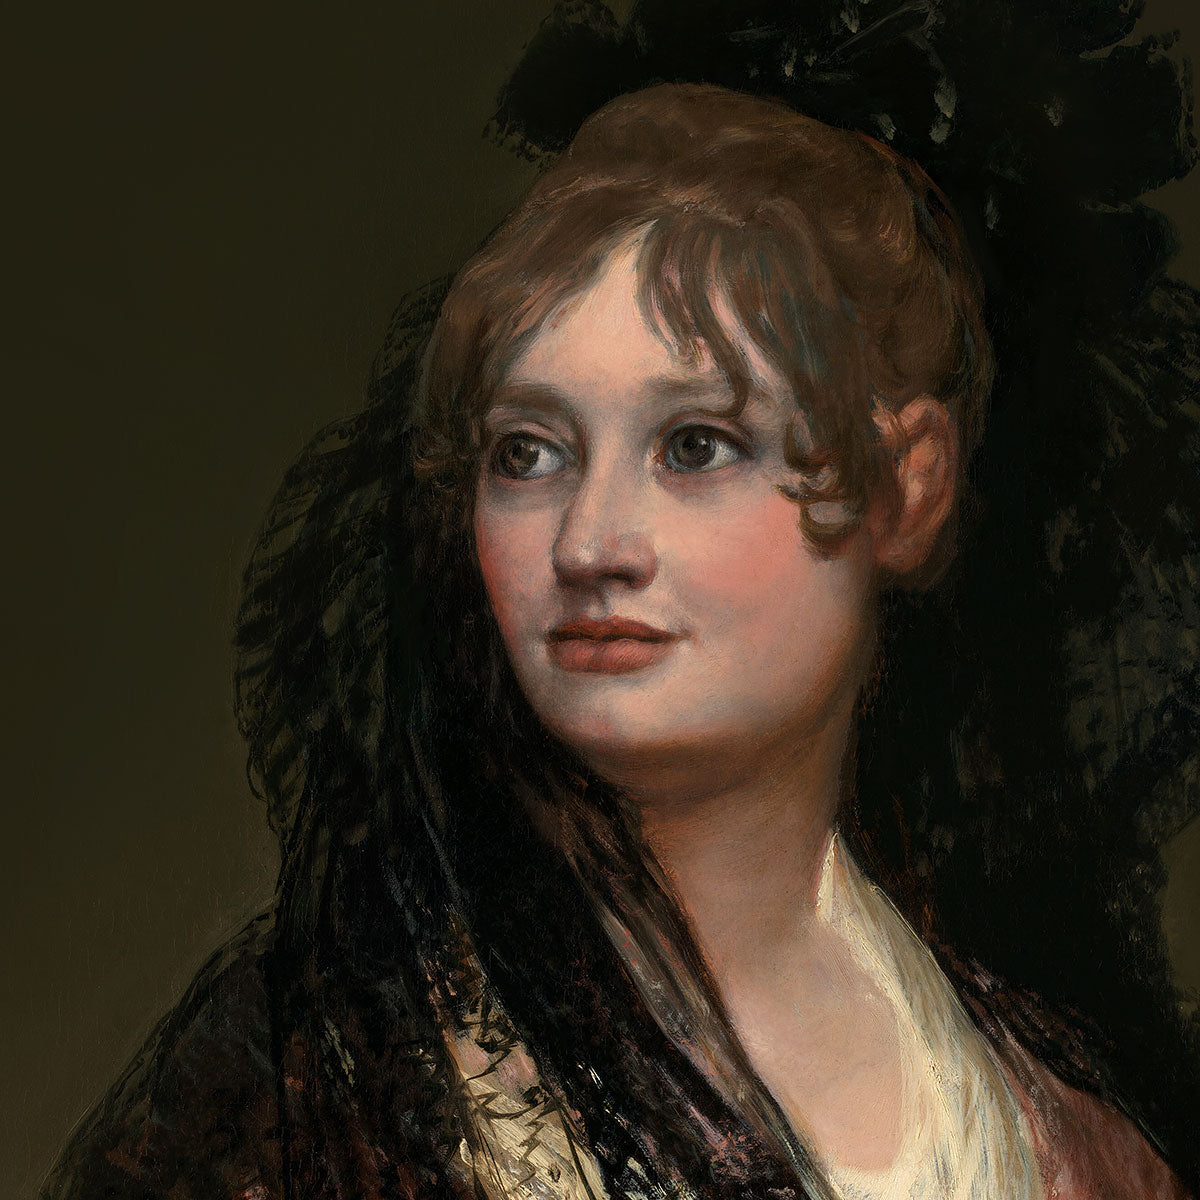 Portrait of Doña Isabel de Porcel by Francisco de Goya